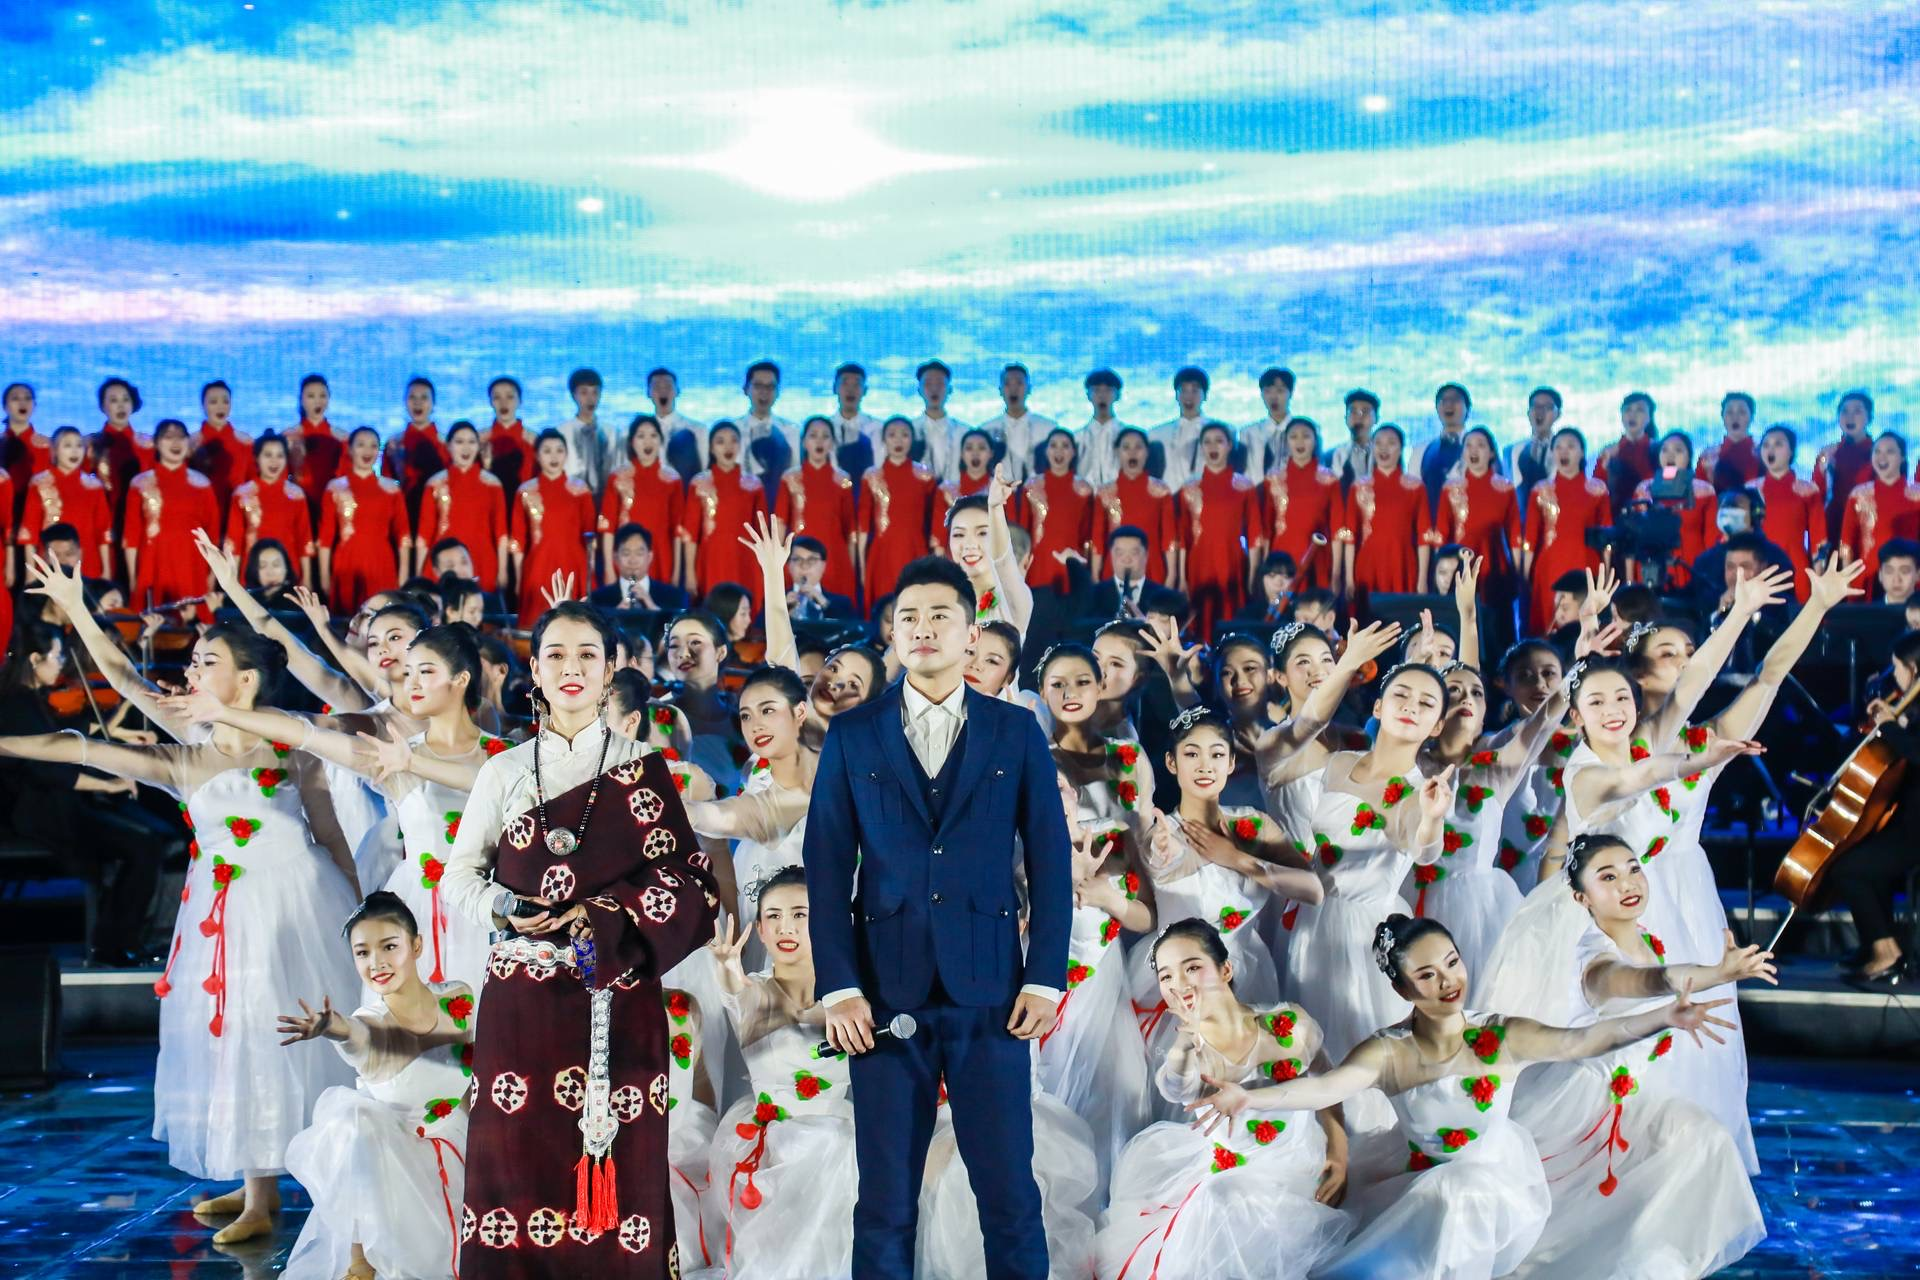 Chengdu-based singer Jason Zhang was named as an ambassador for the Games ©Chengdu 2021